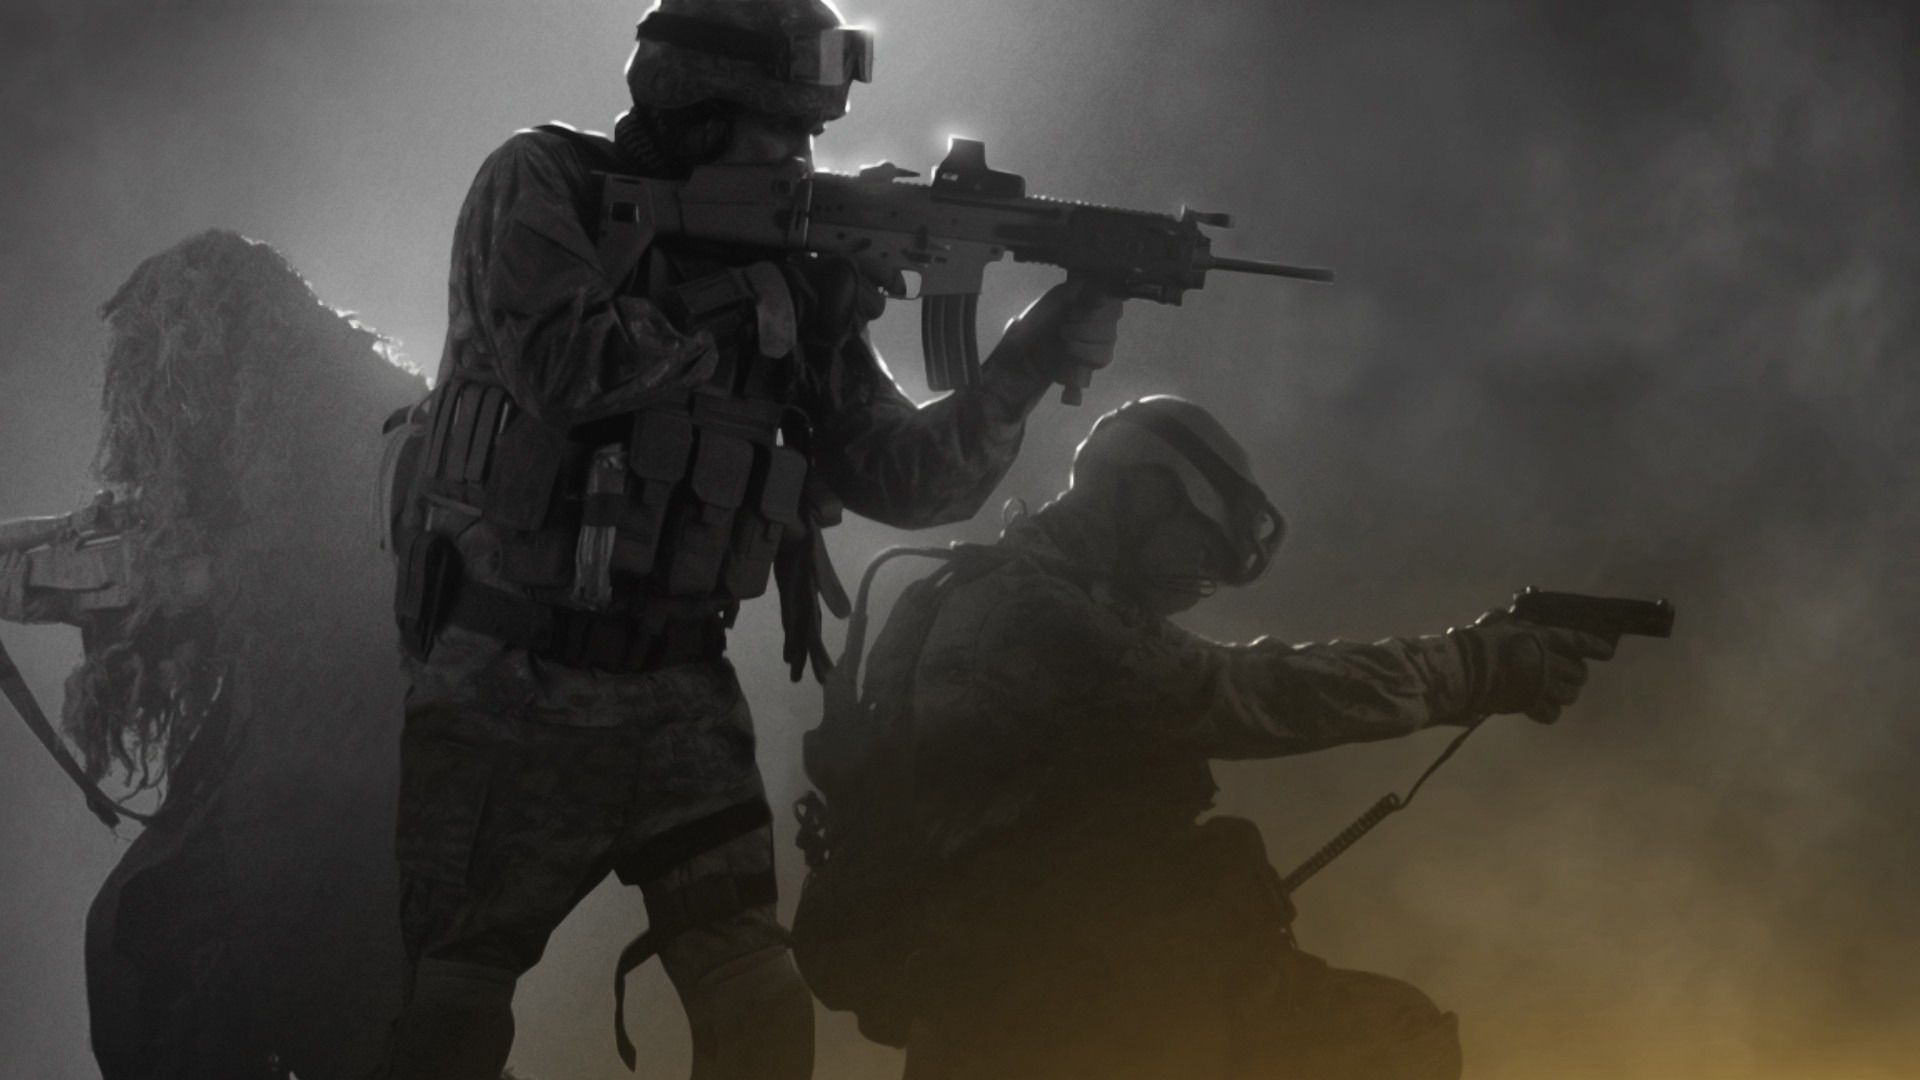 Free download download call of duty modern warfare 2 game HD